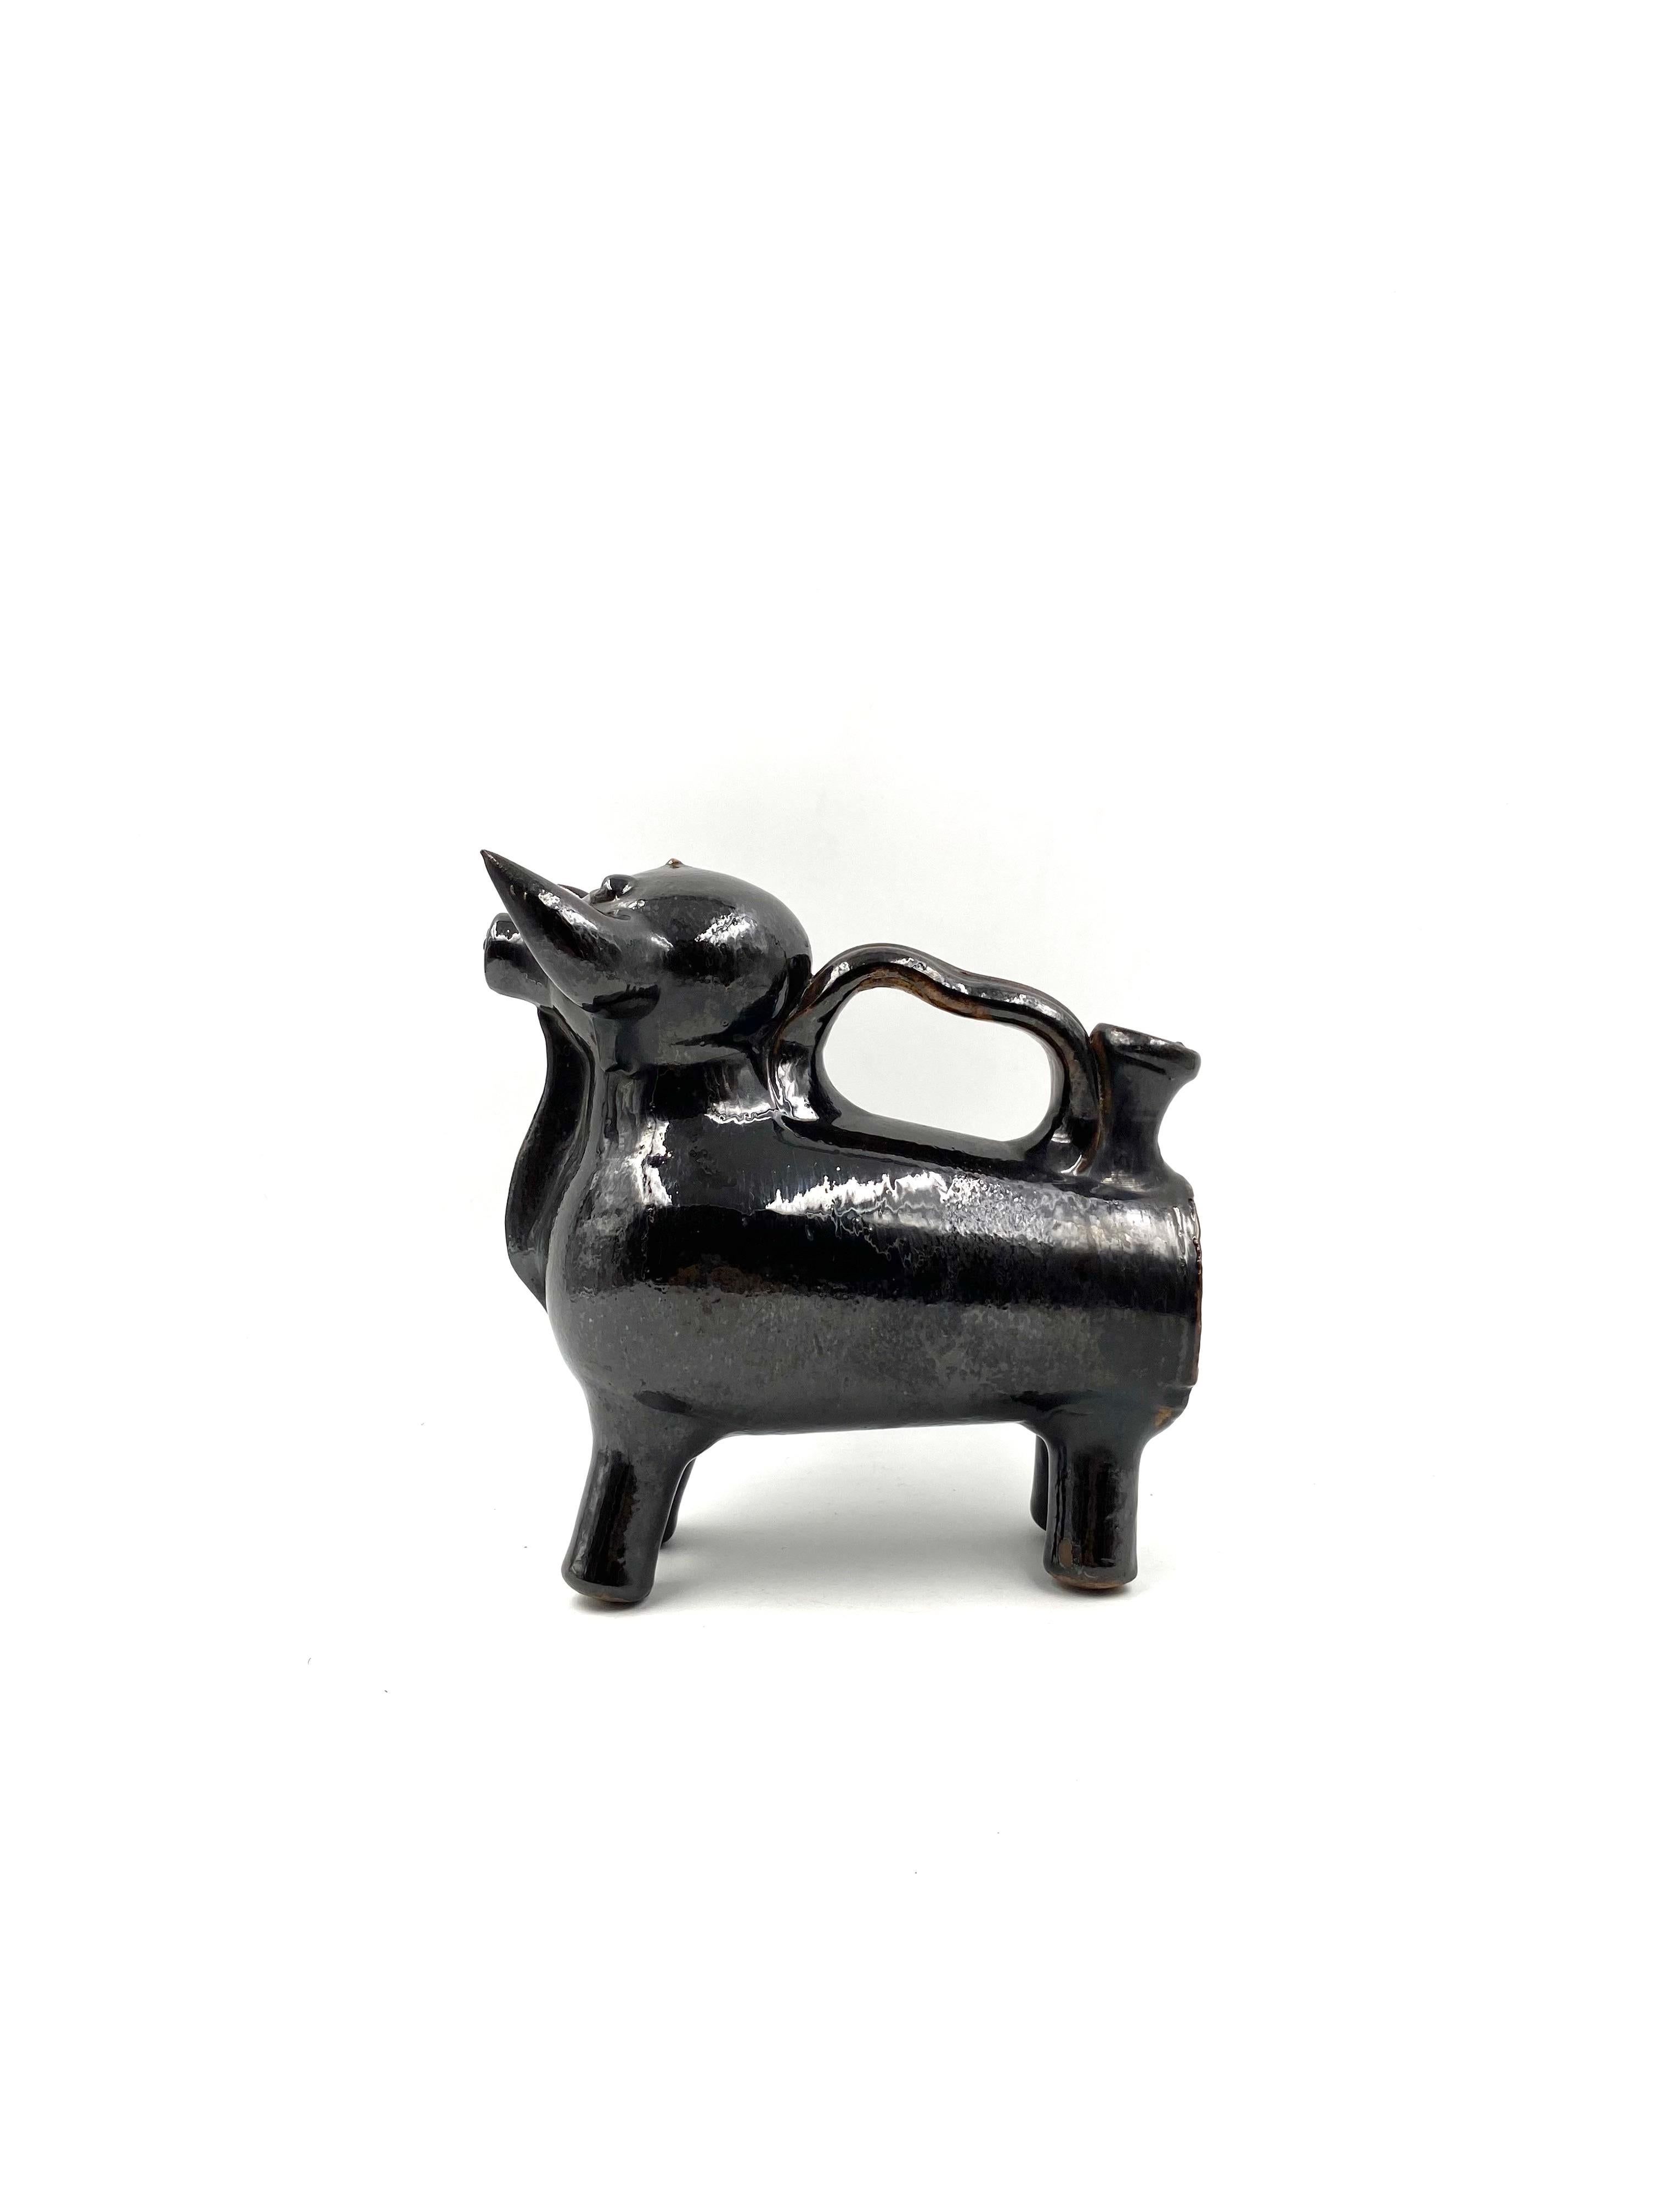 Primitive Ancient Mediterranean Style Bull Shaped Jug Sculpture, France, 1960s For Sale